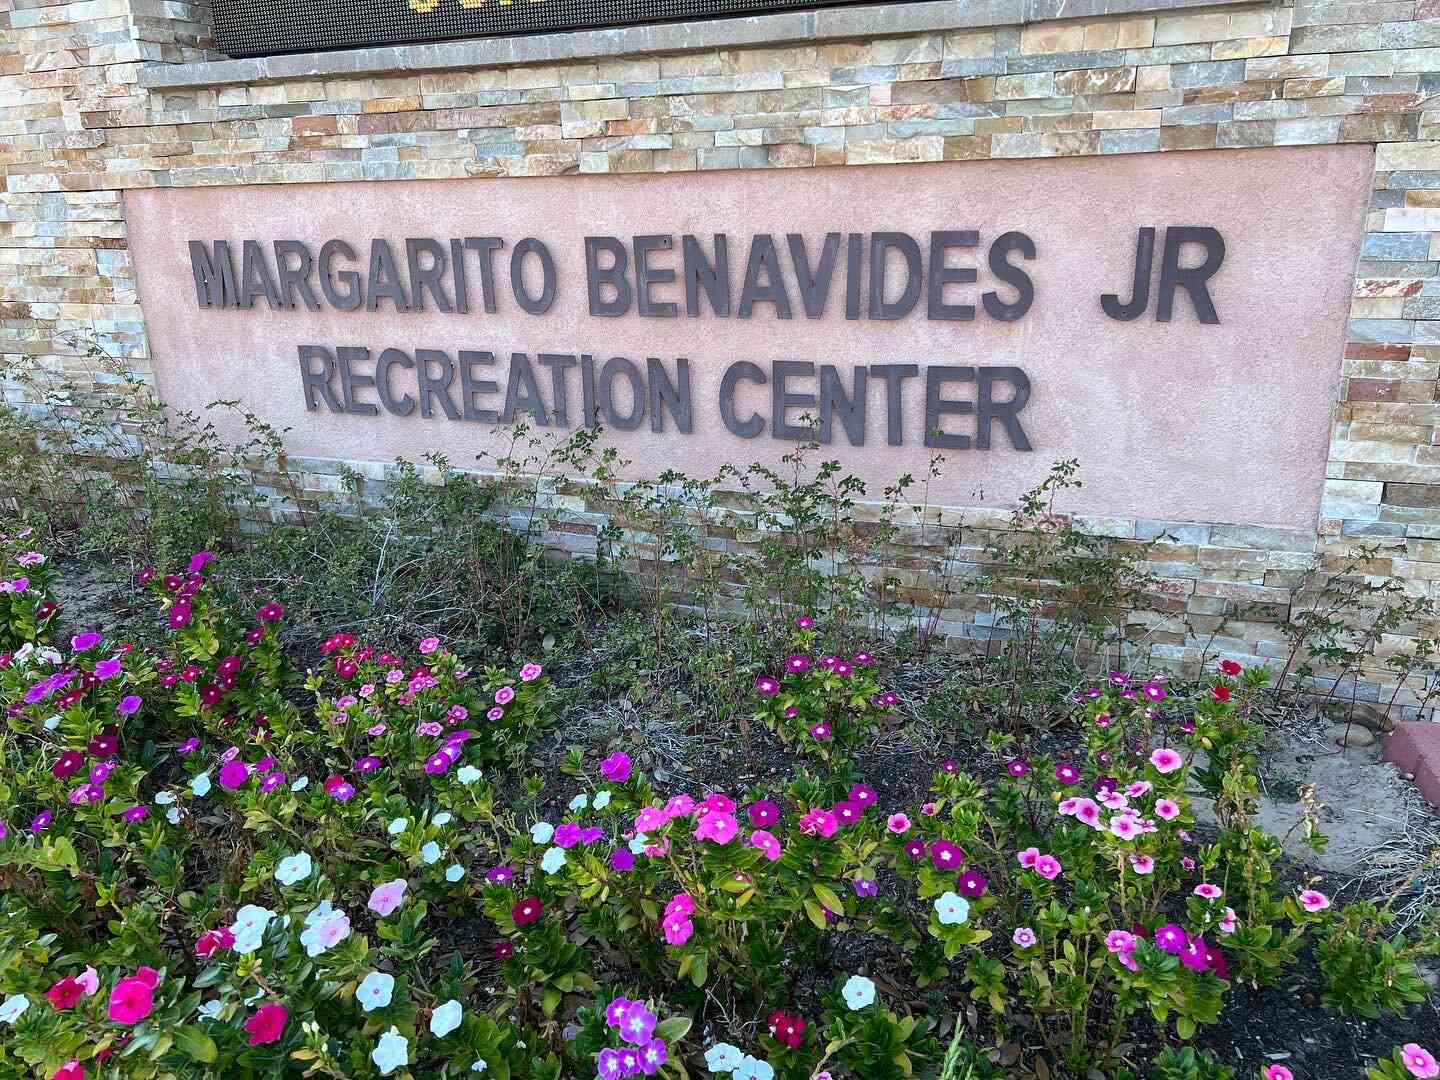 Margarito Benavides Jr. Recreation Center, or Tarver Recreation Center entrance